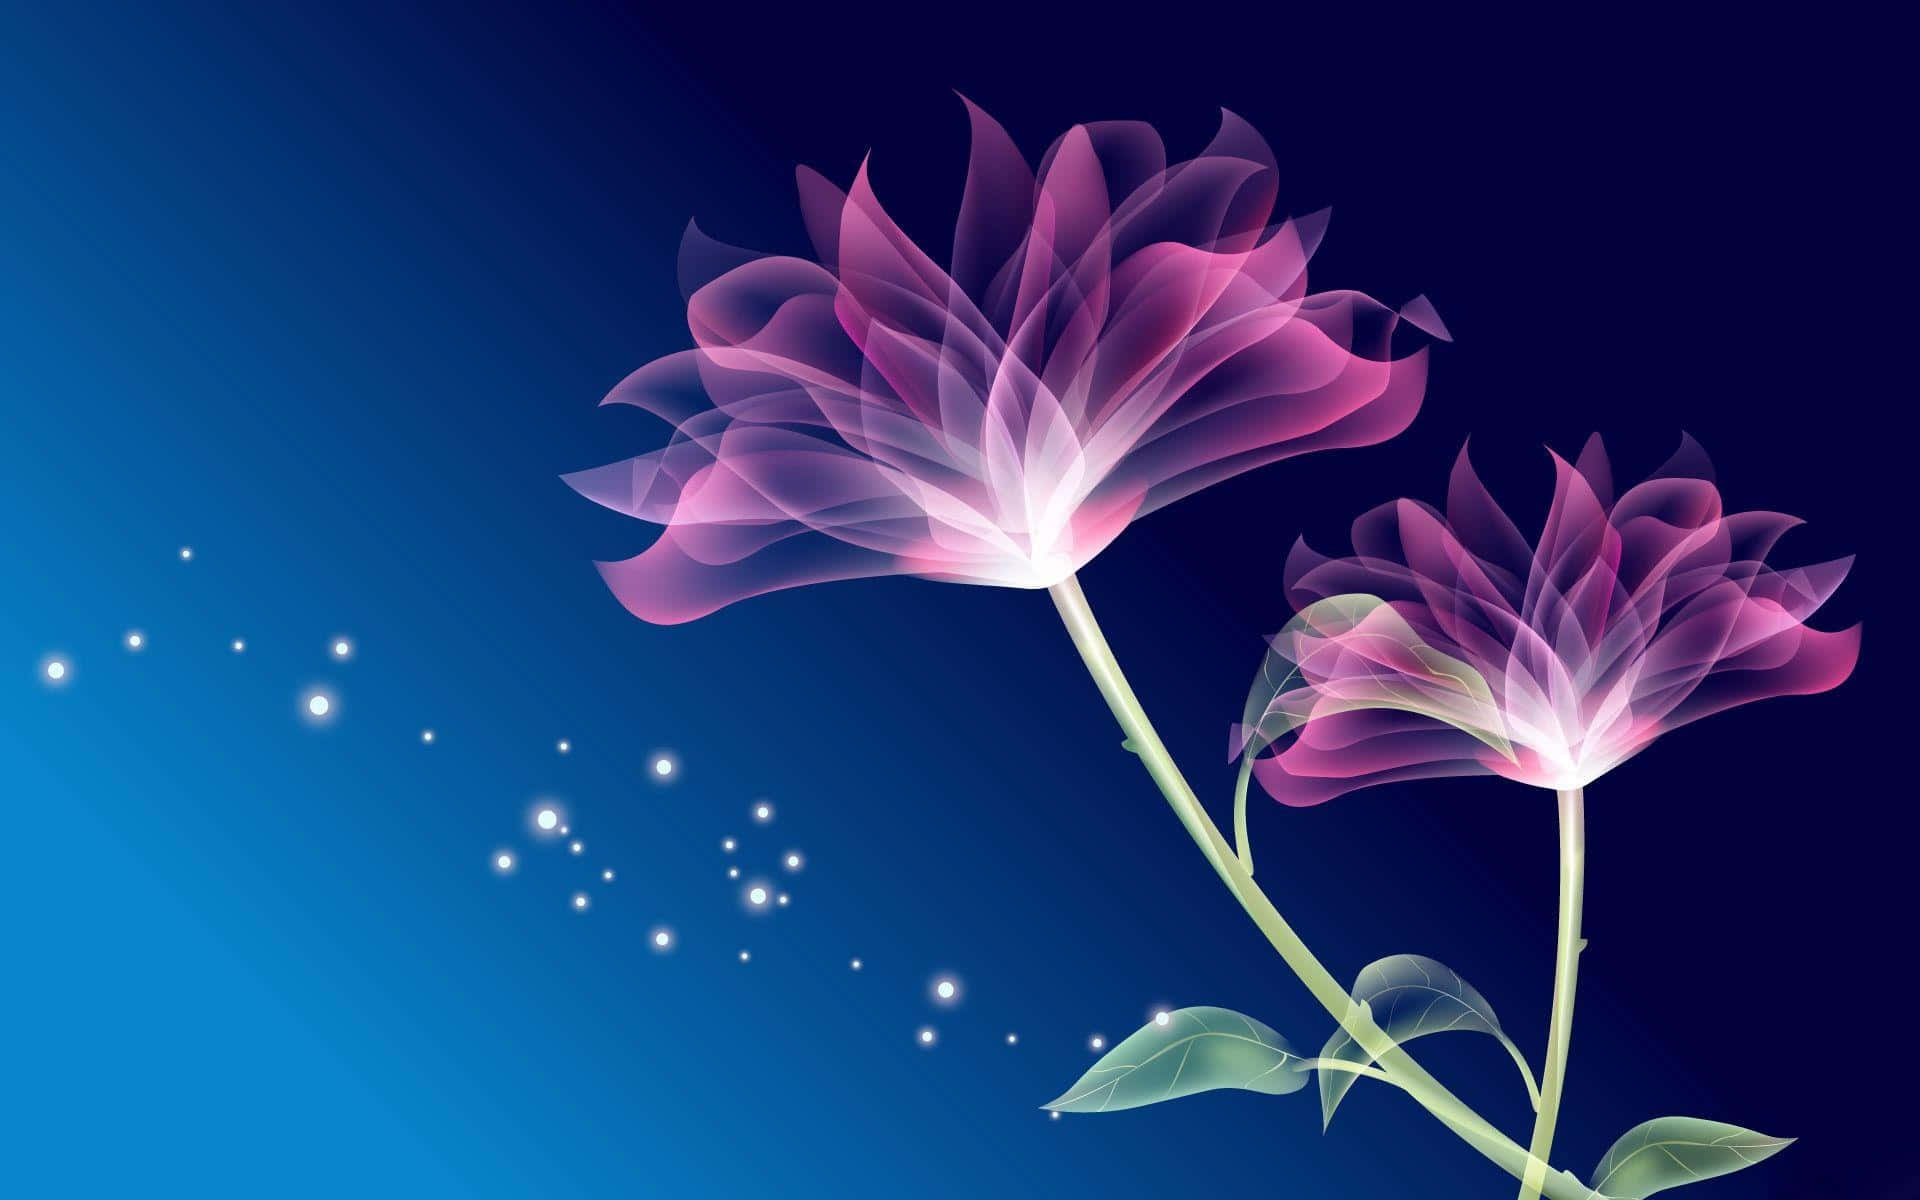 3D Flower Wallpaper Backgrounds | JPG Free Download - Pikbest